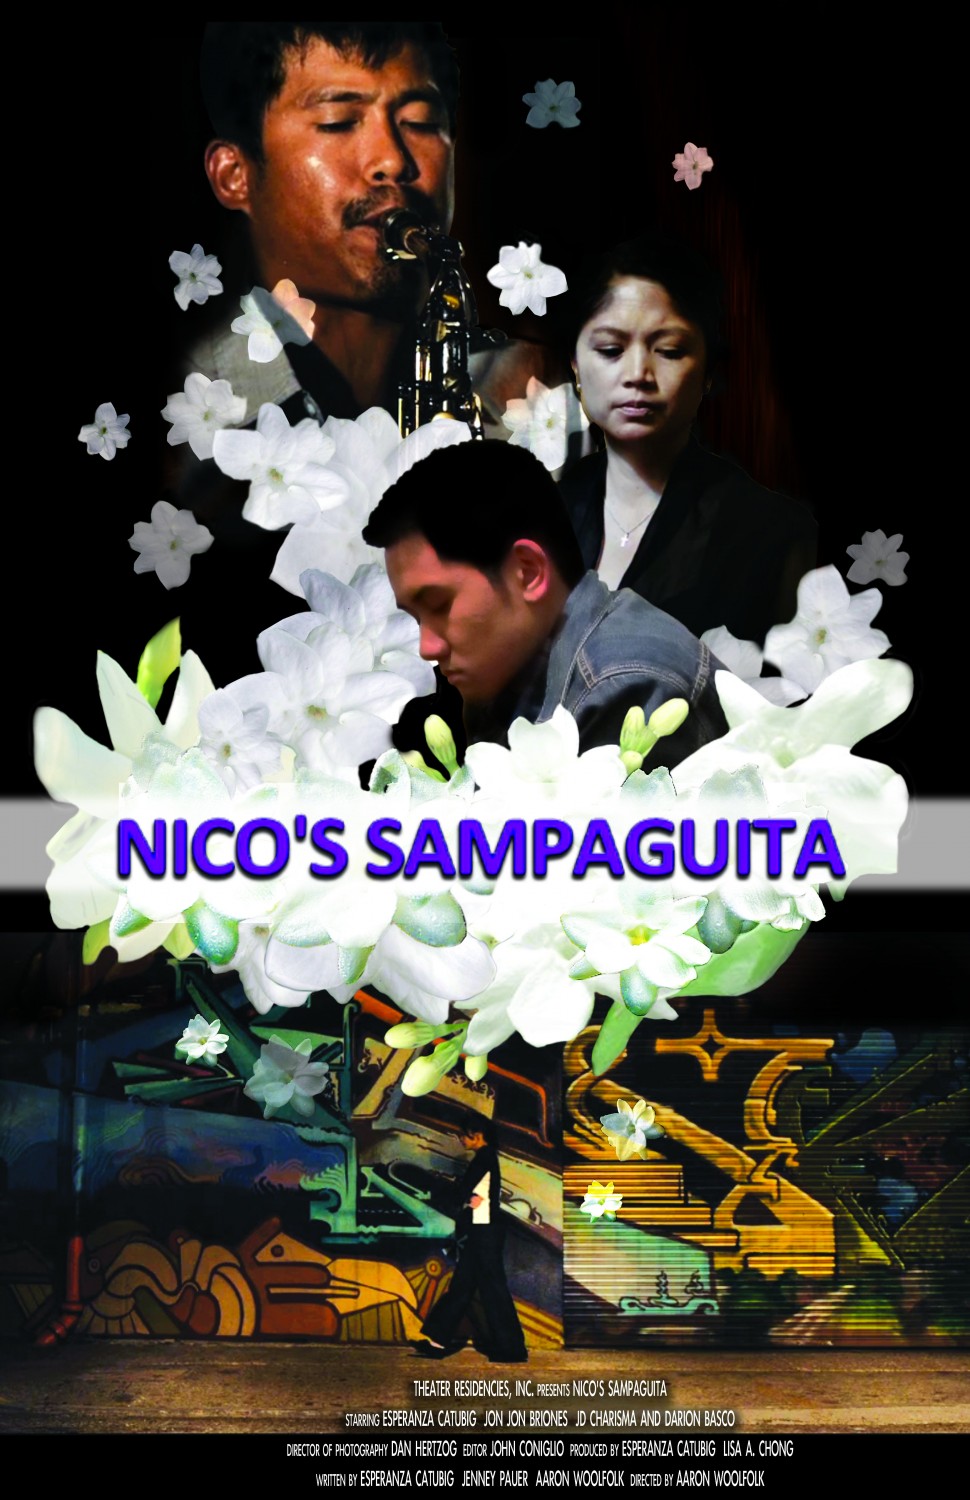 Extra Large Movie Poster Image for Nico's Sampaguita